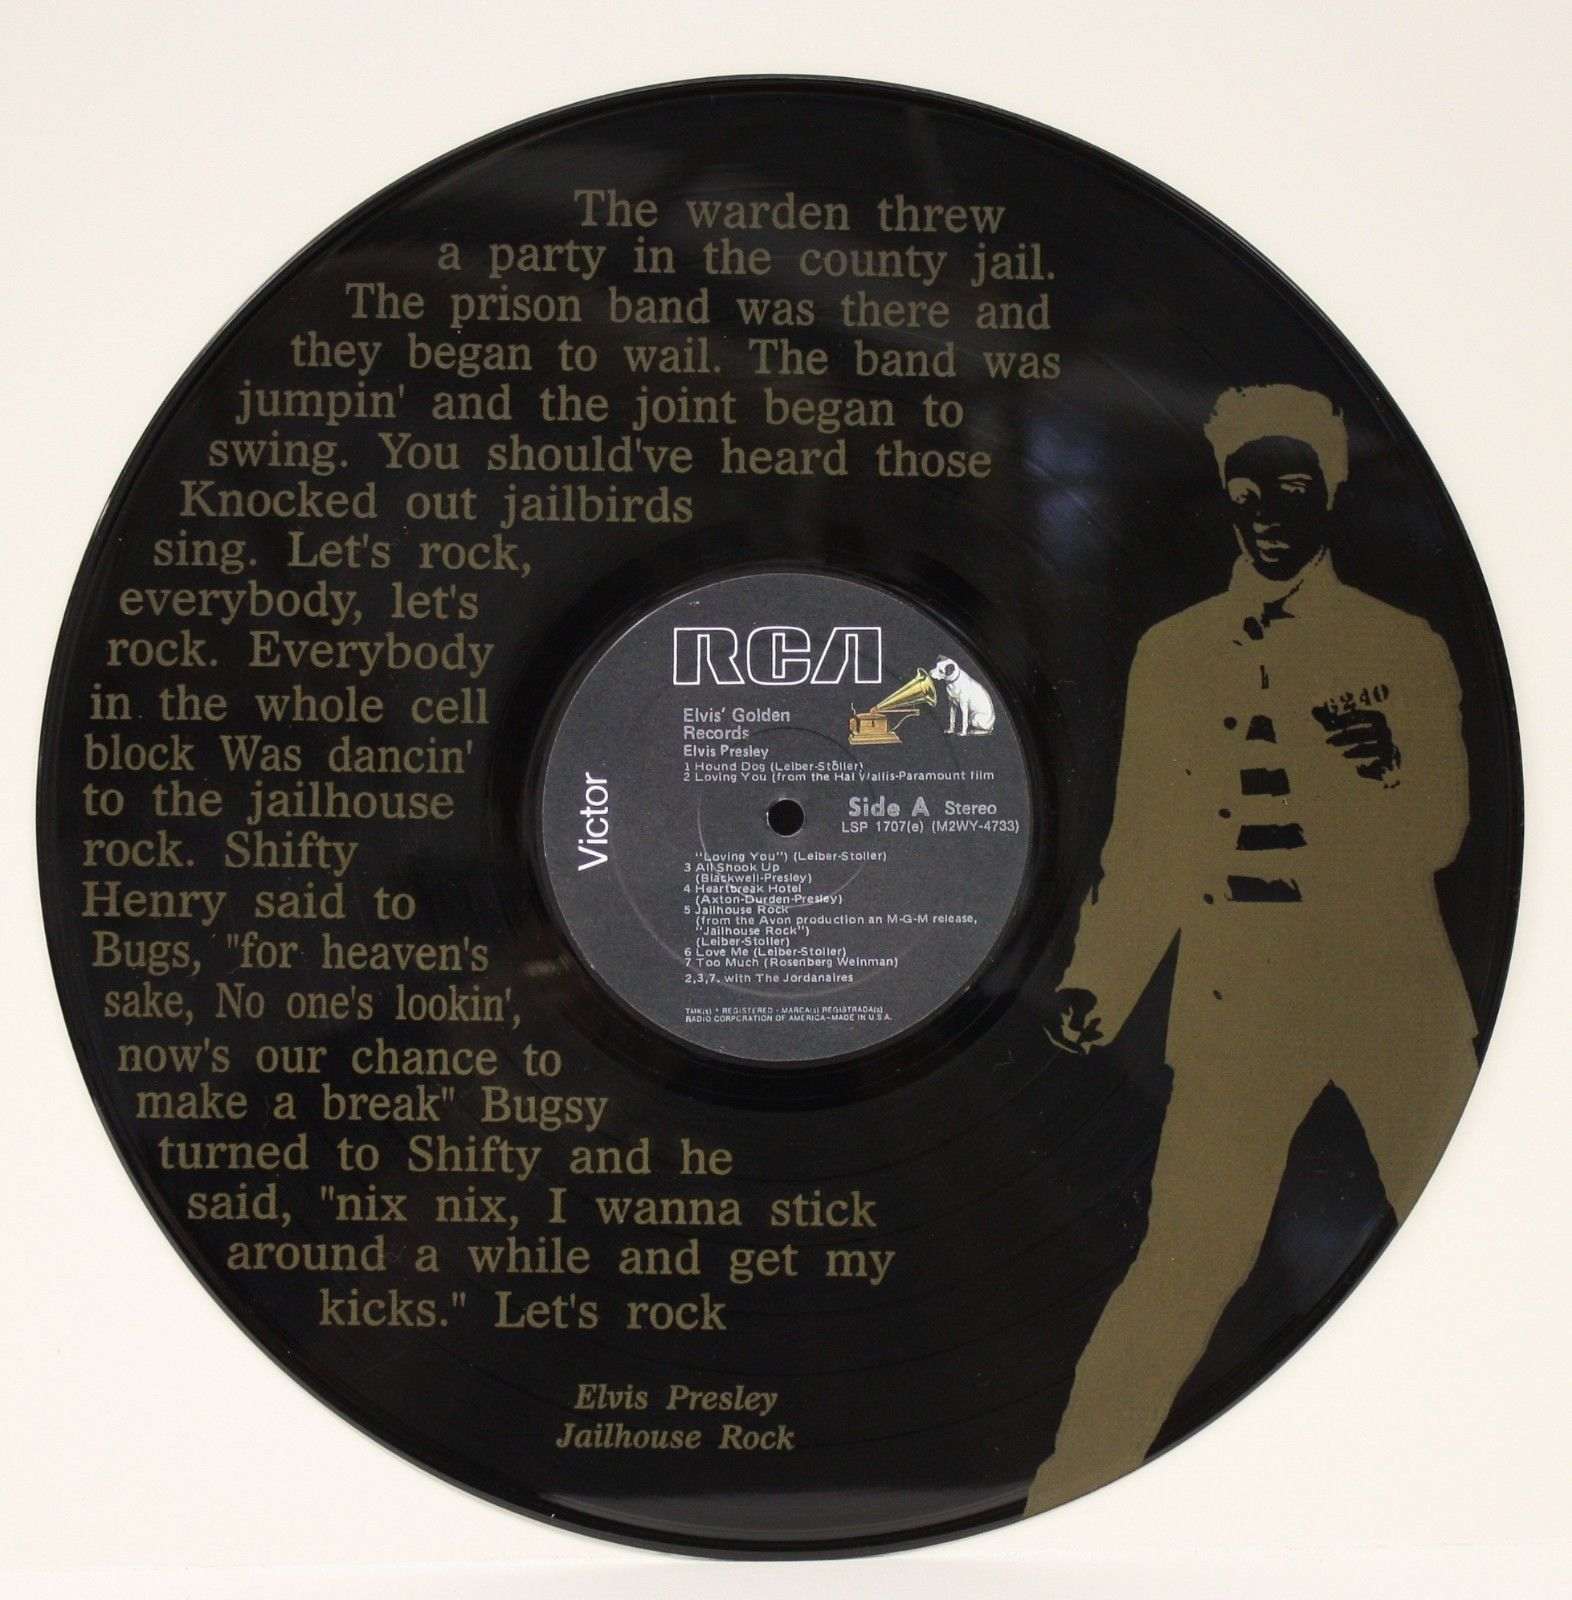 Personalised Song Lyrics Vinyl Record Wall Art LP Print